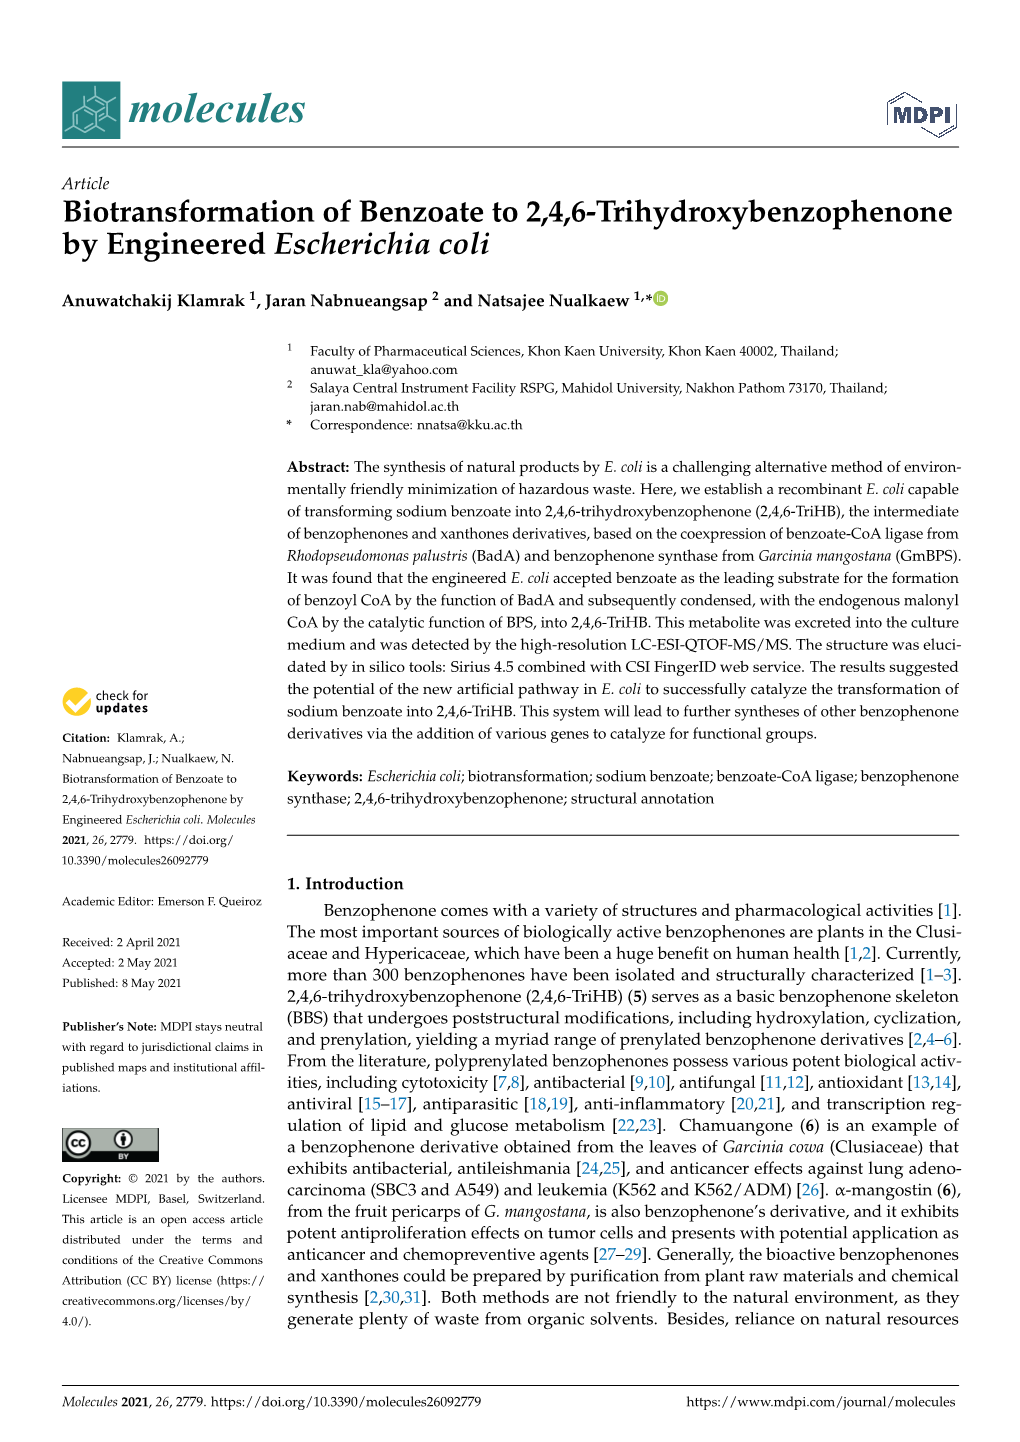 Biotransformation of Benzoate to 2,4,6-Trihydroxybenzophenone by Engineered Escherichia Coli